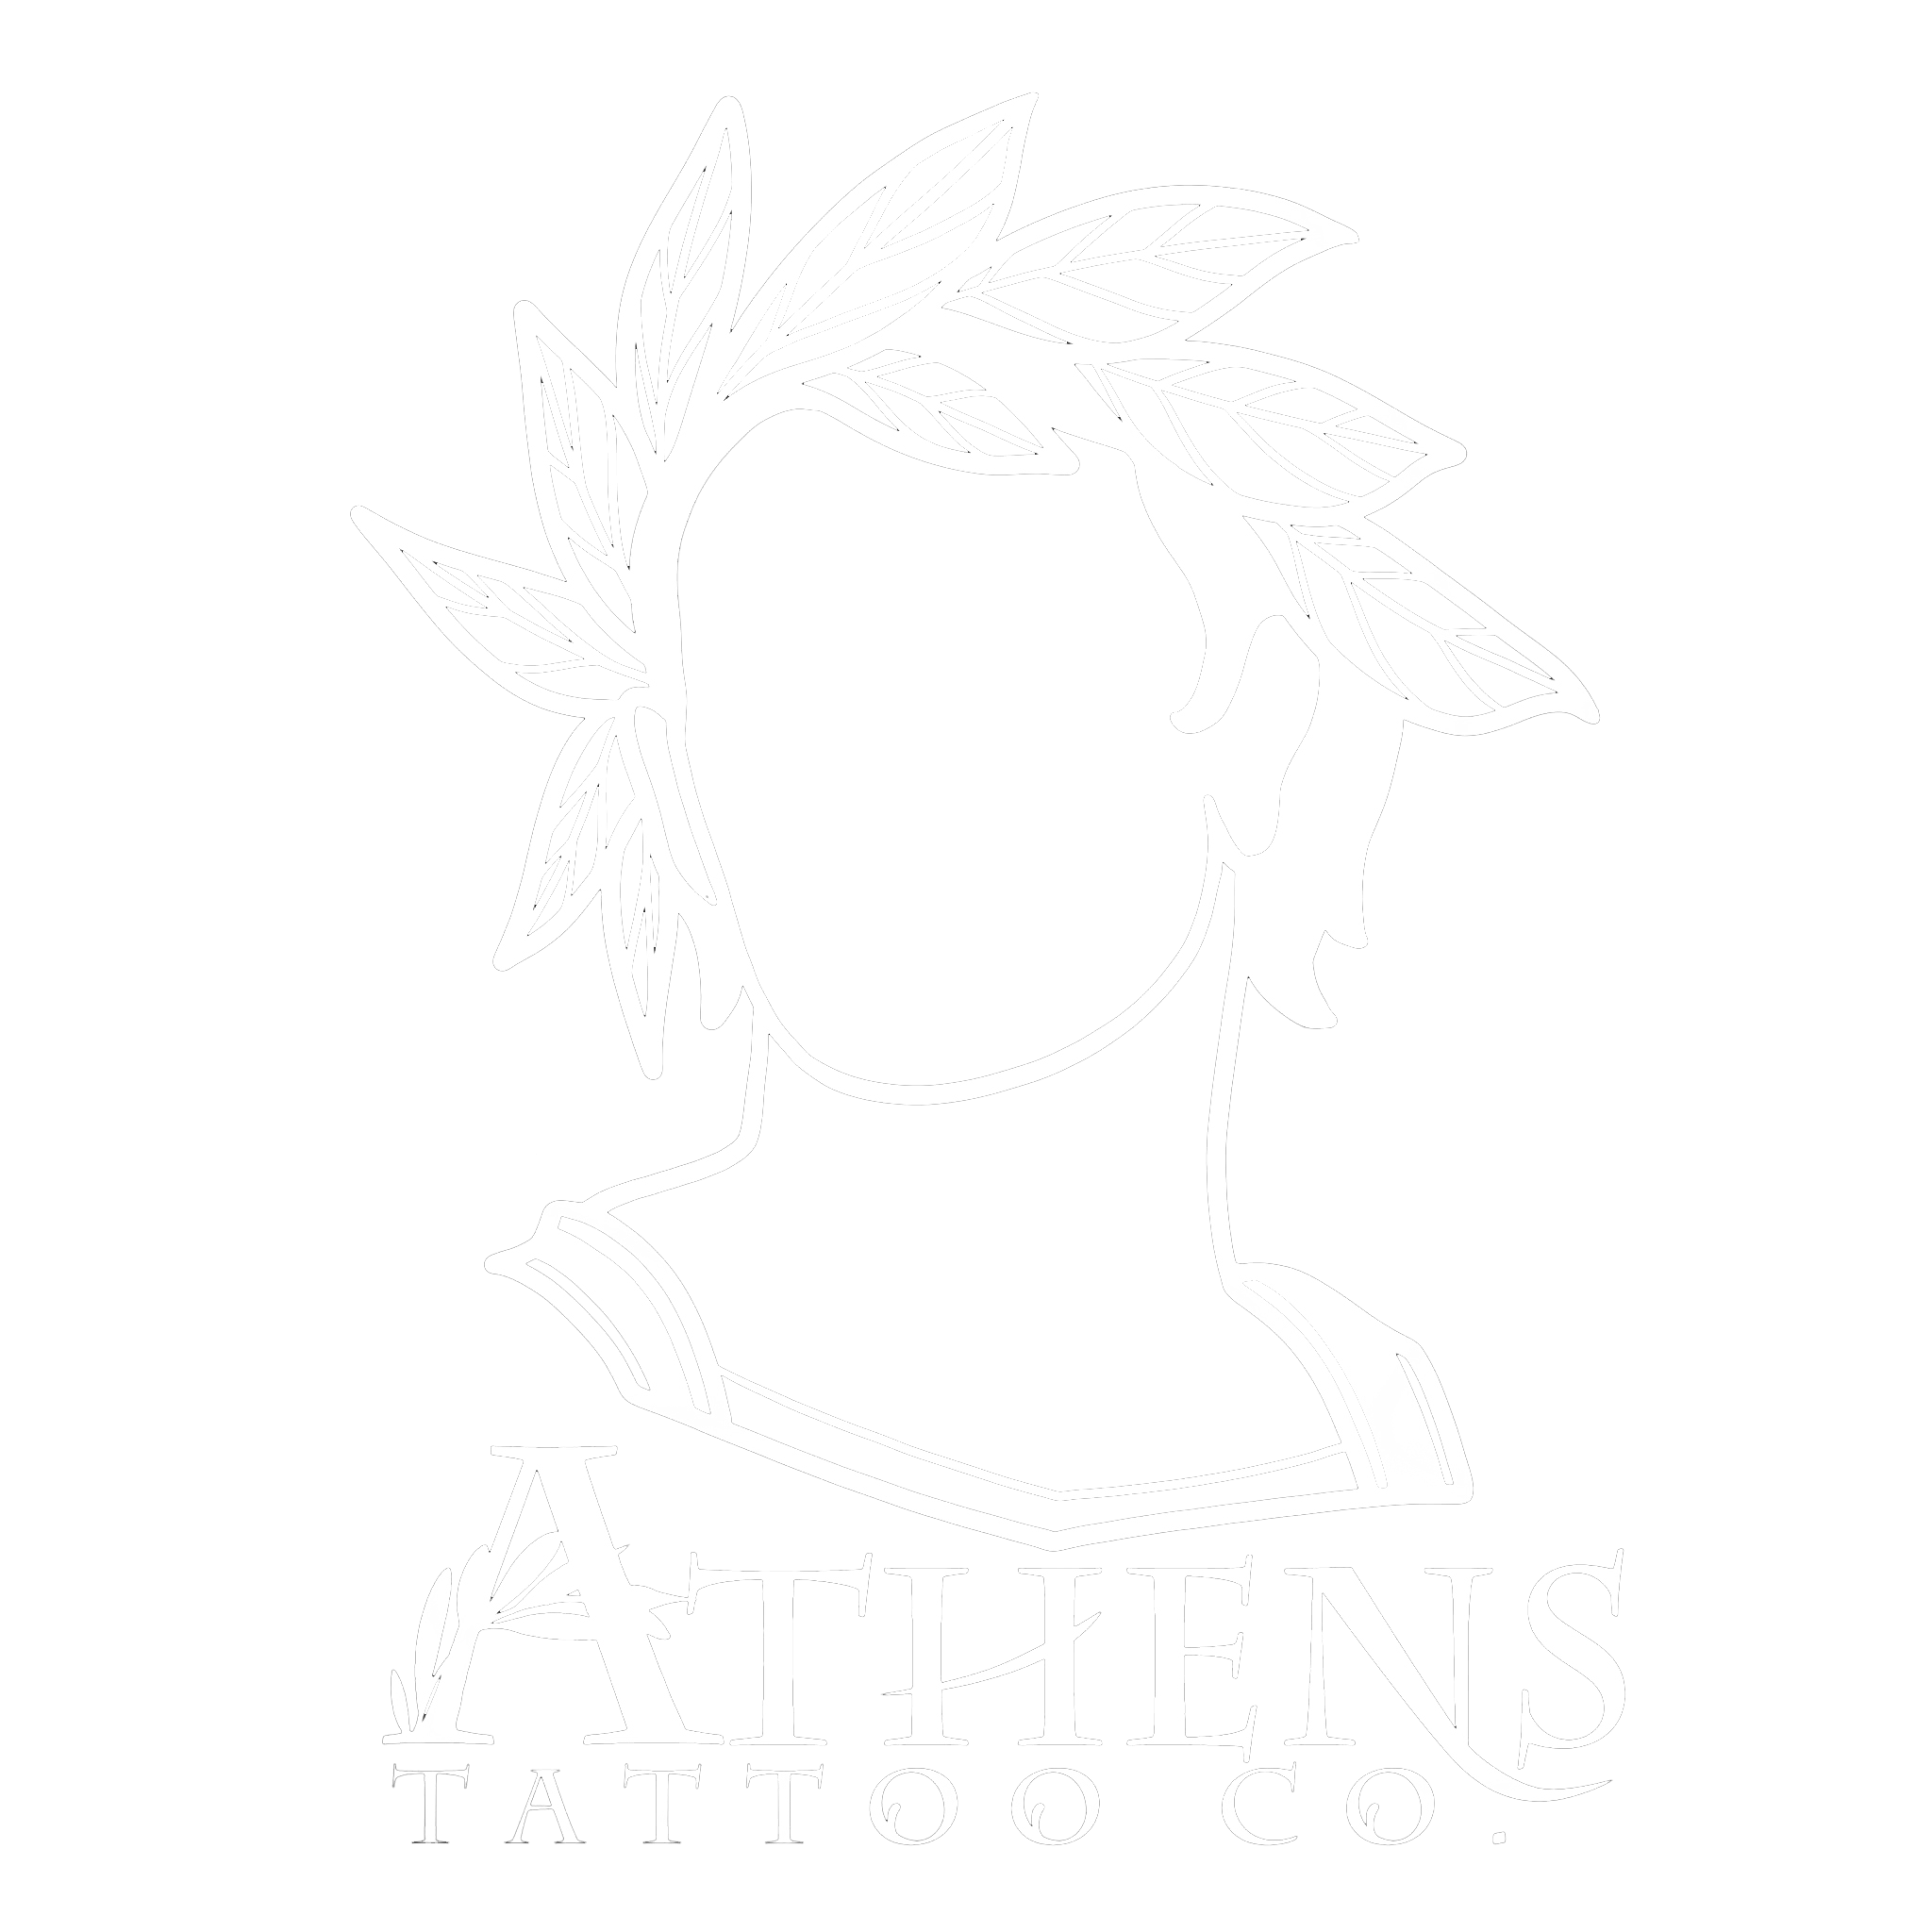 Athens Tattoo Co.